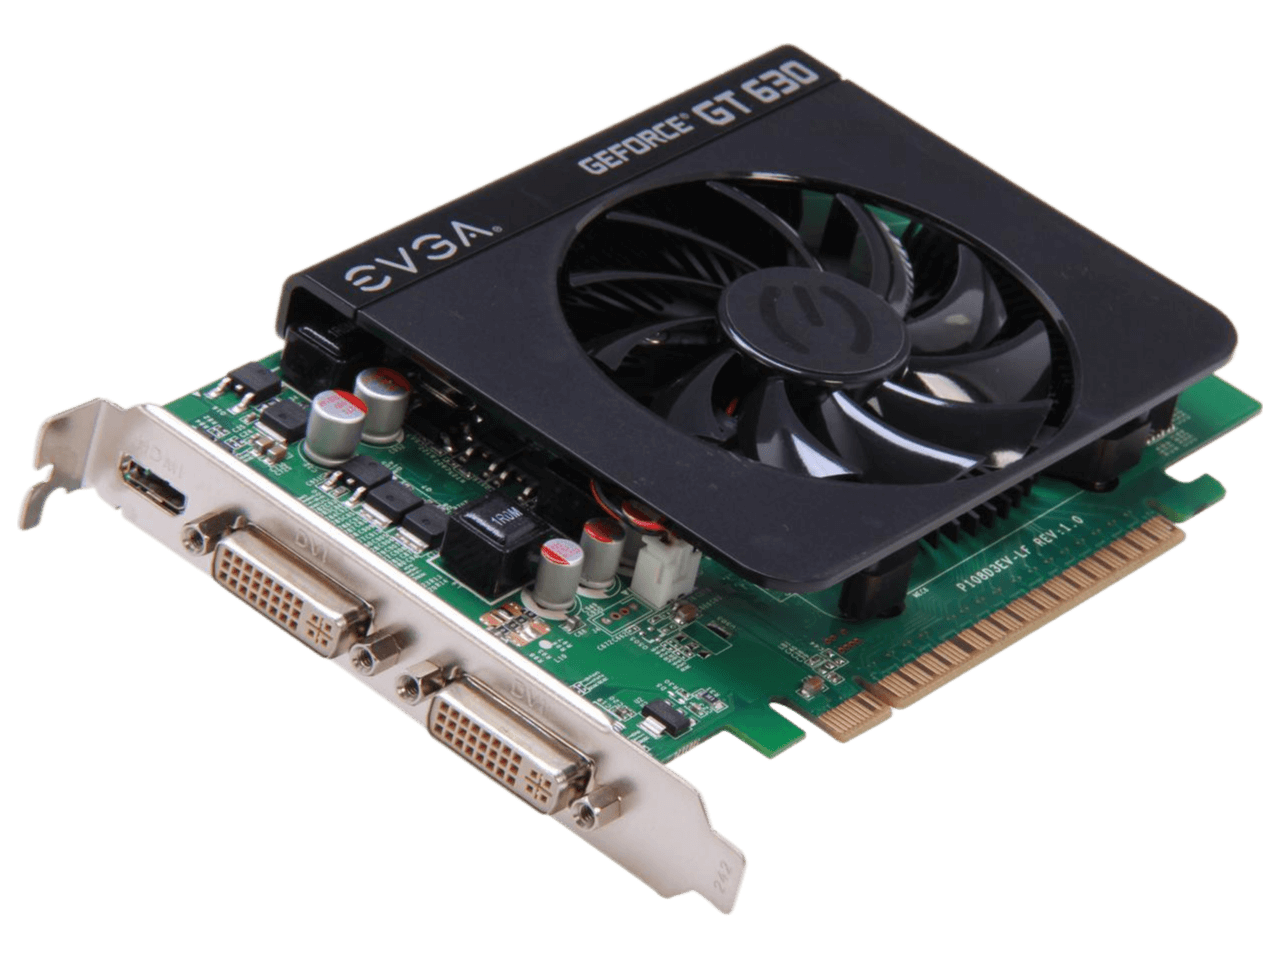 EVGA GeForce GT 730 4GB DDR3 PCI Express 2.0 Video Card 04G-P3-2739-KR